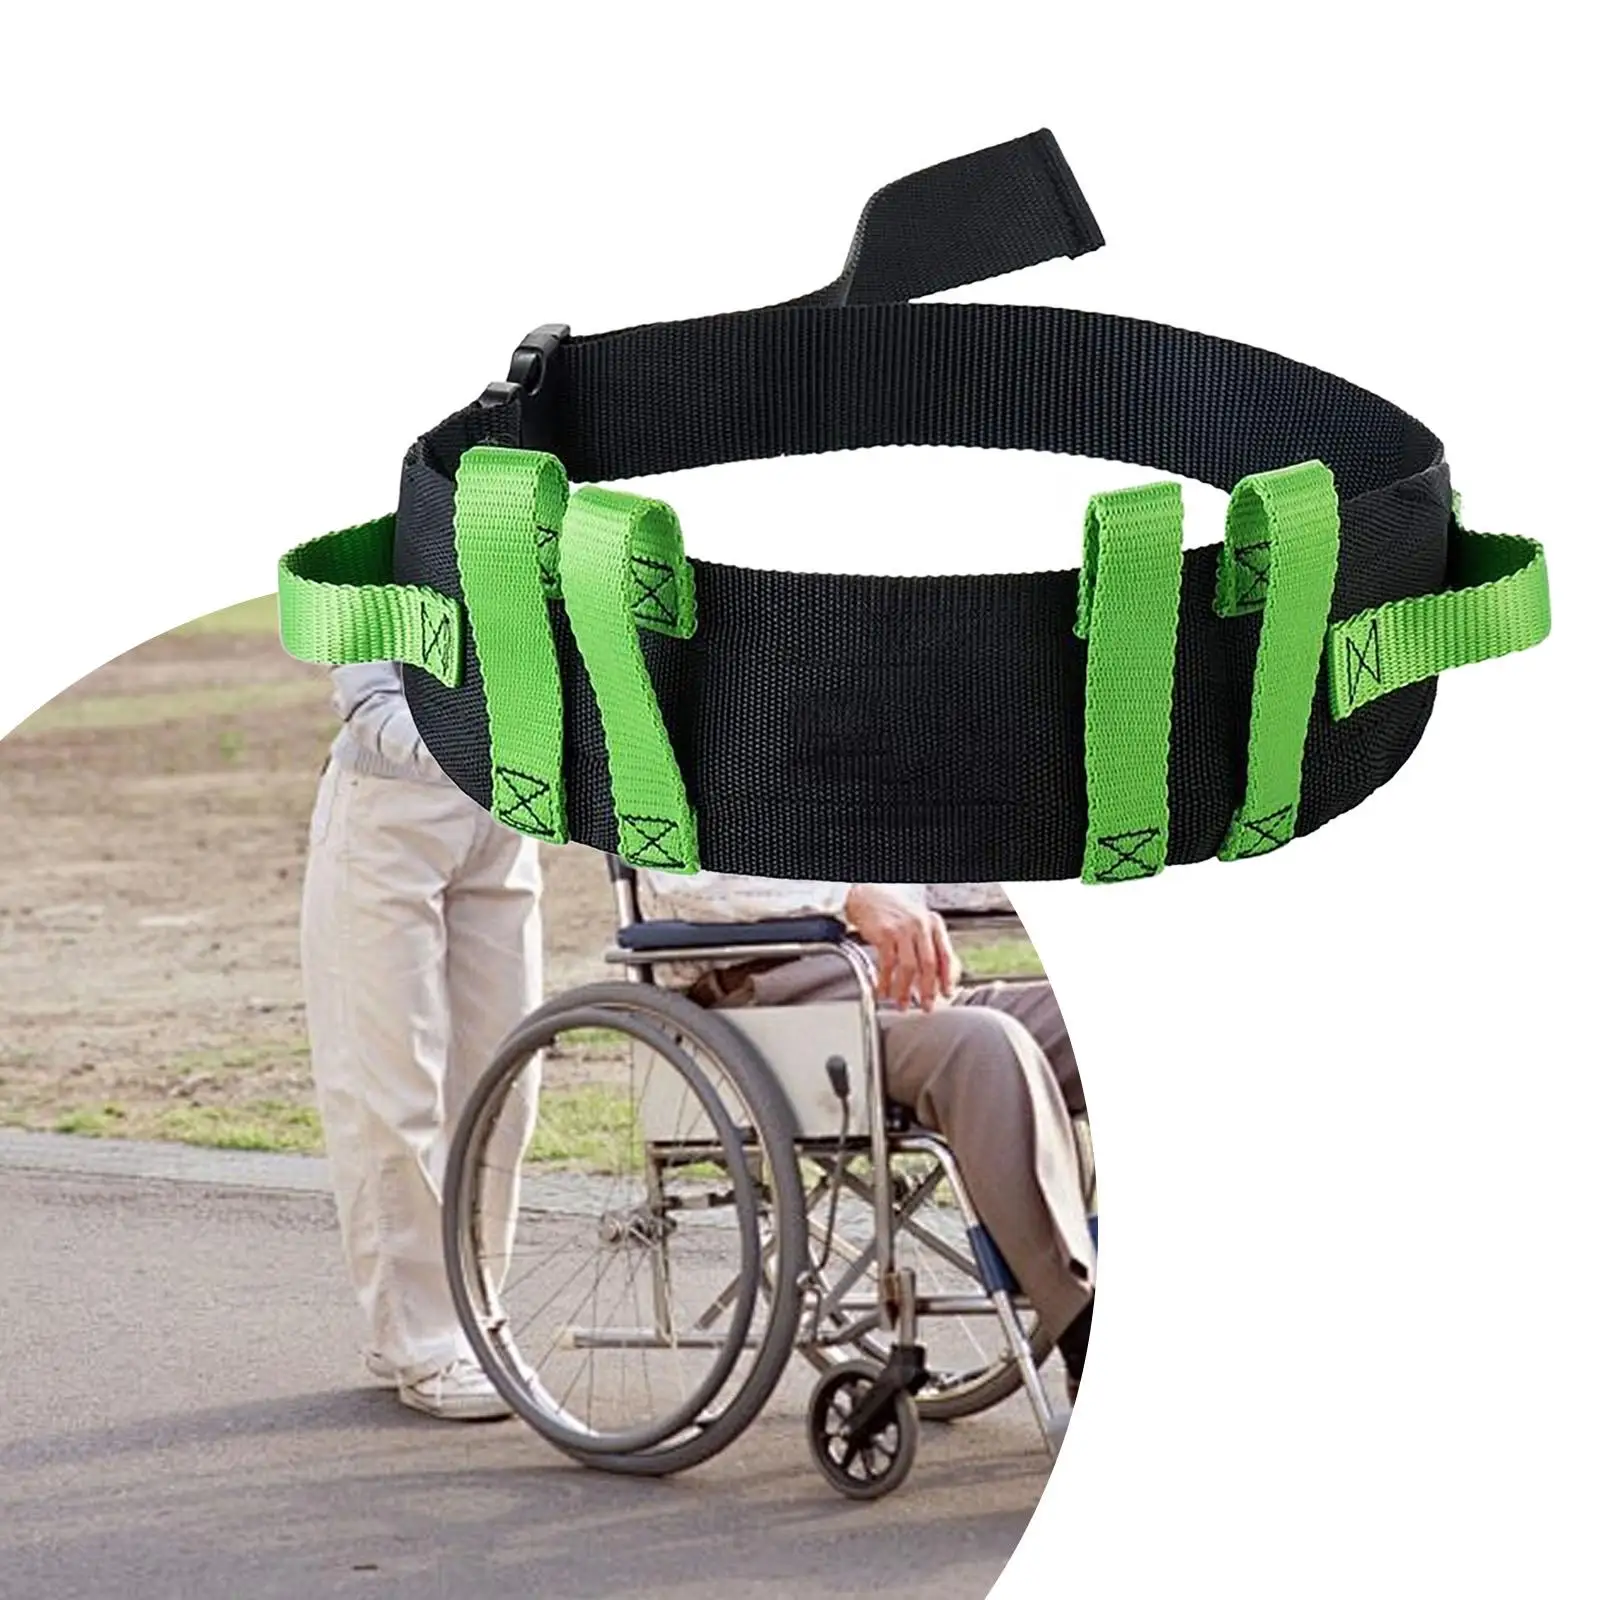 Transfer Gait Belt Walking Occupational Waist Strap for Seniors Patient